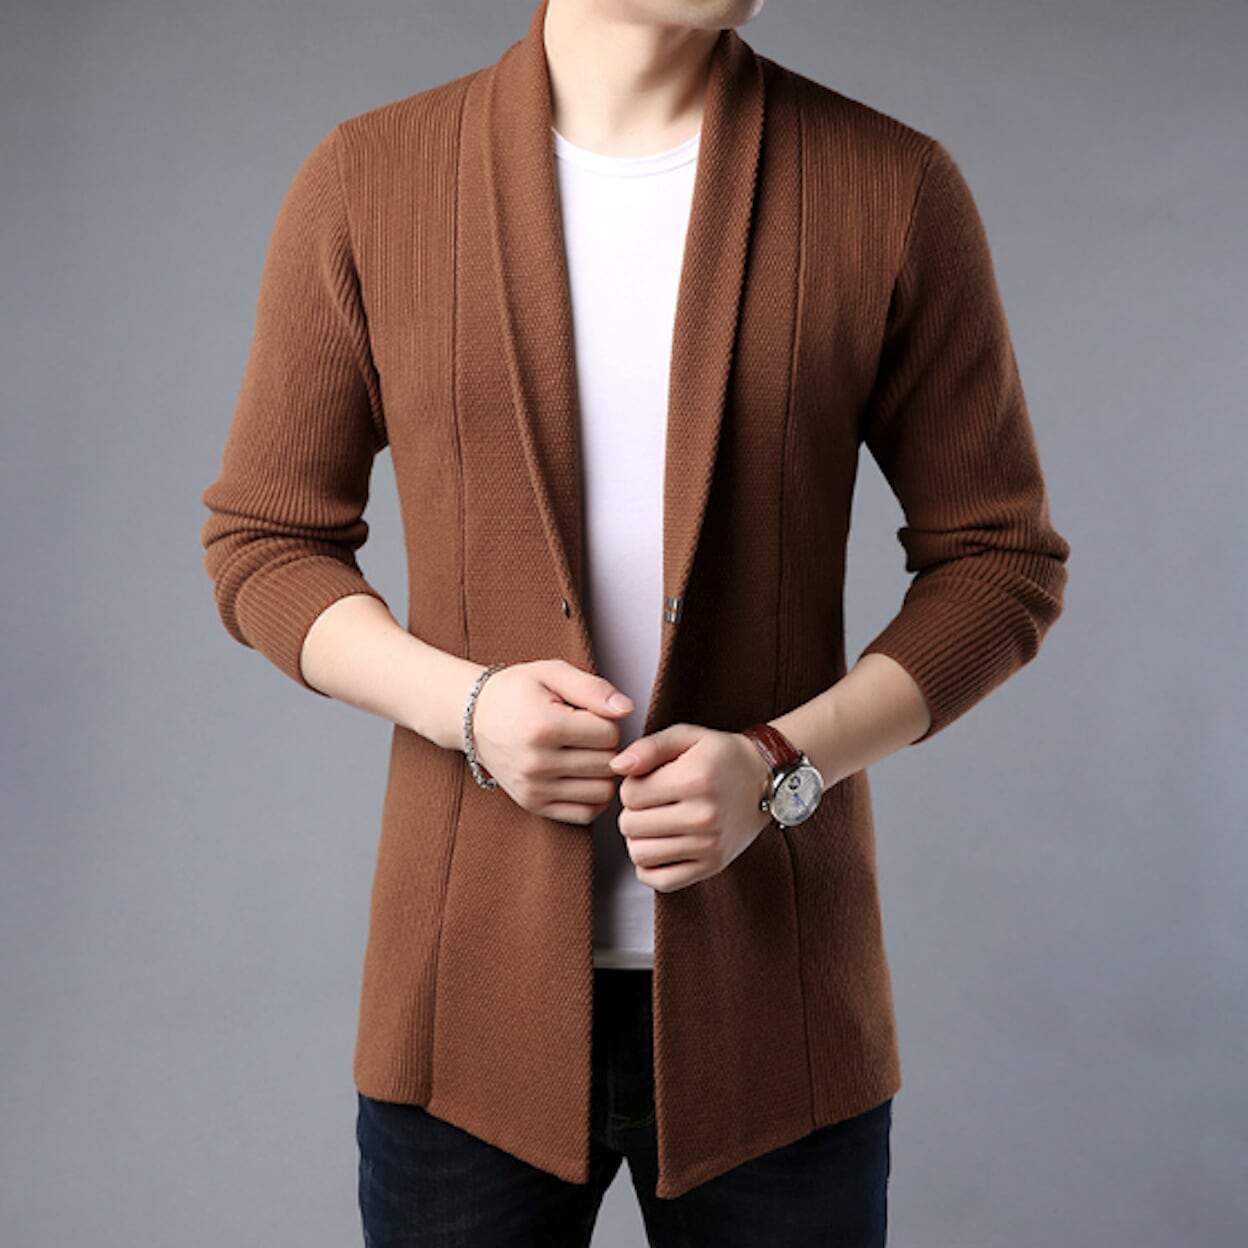 mens brown shawl collar cardigan sweater - AmtifyDirect